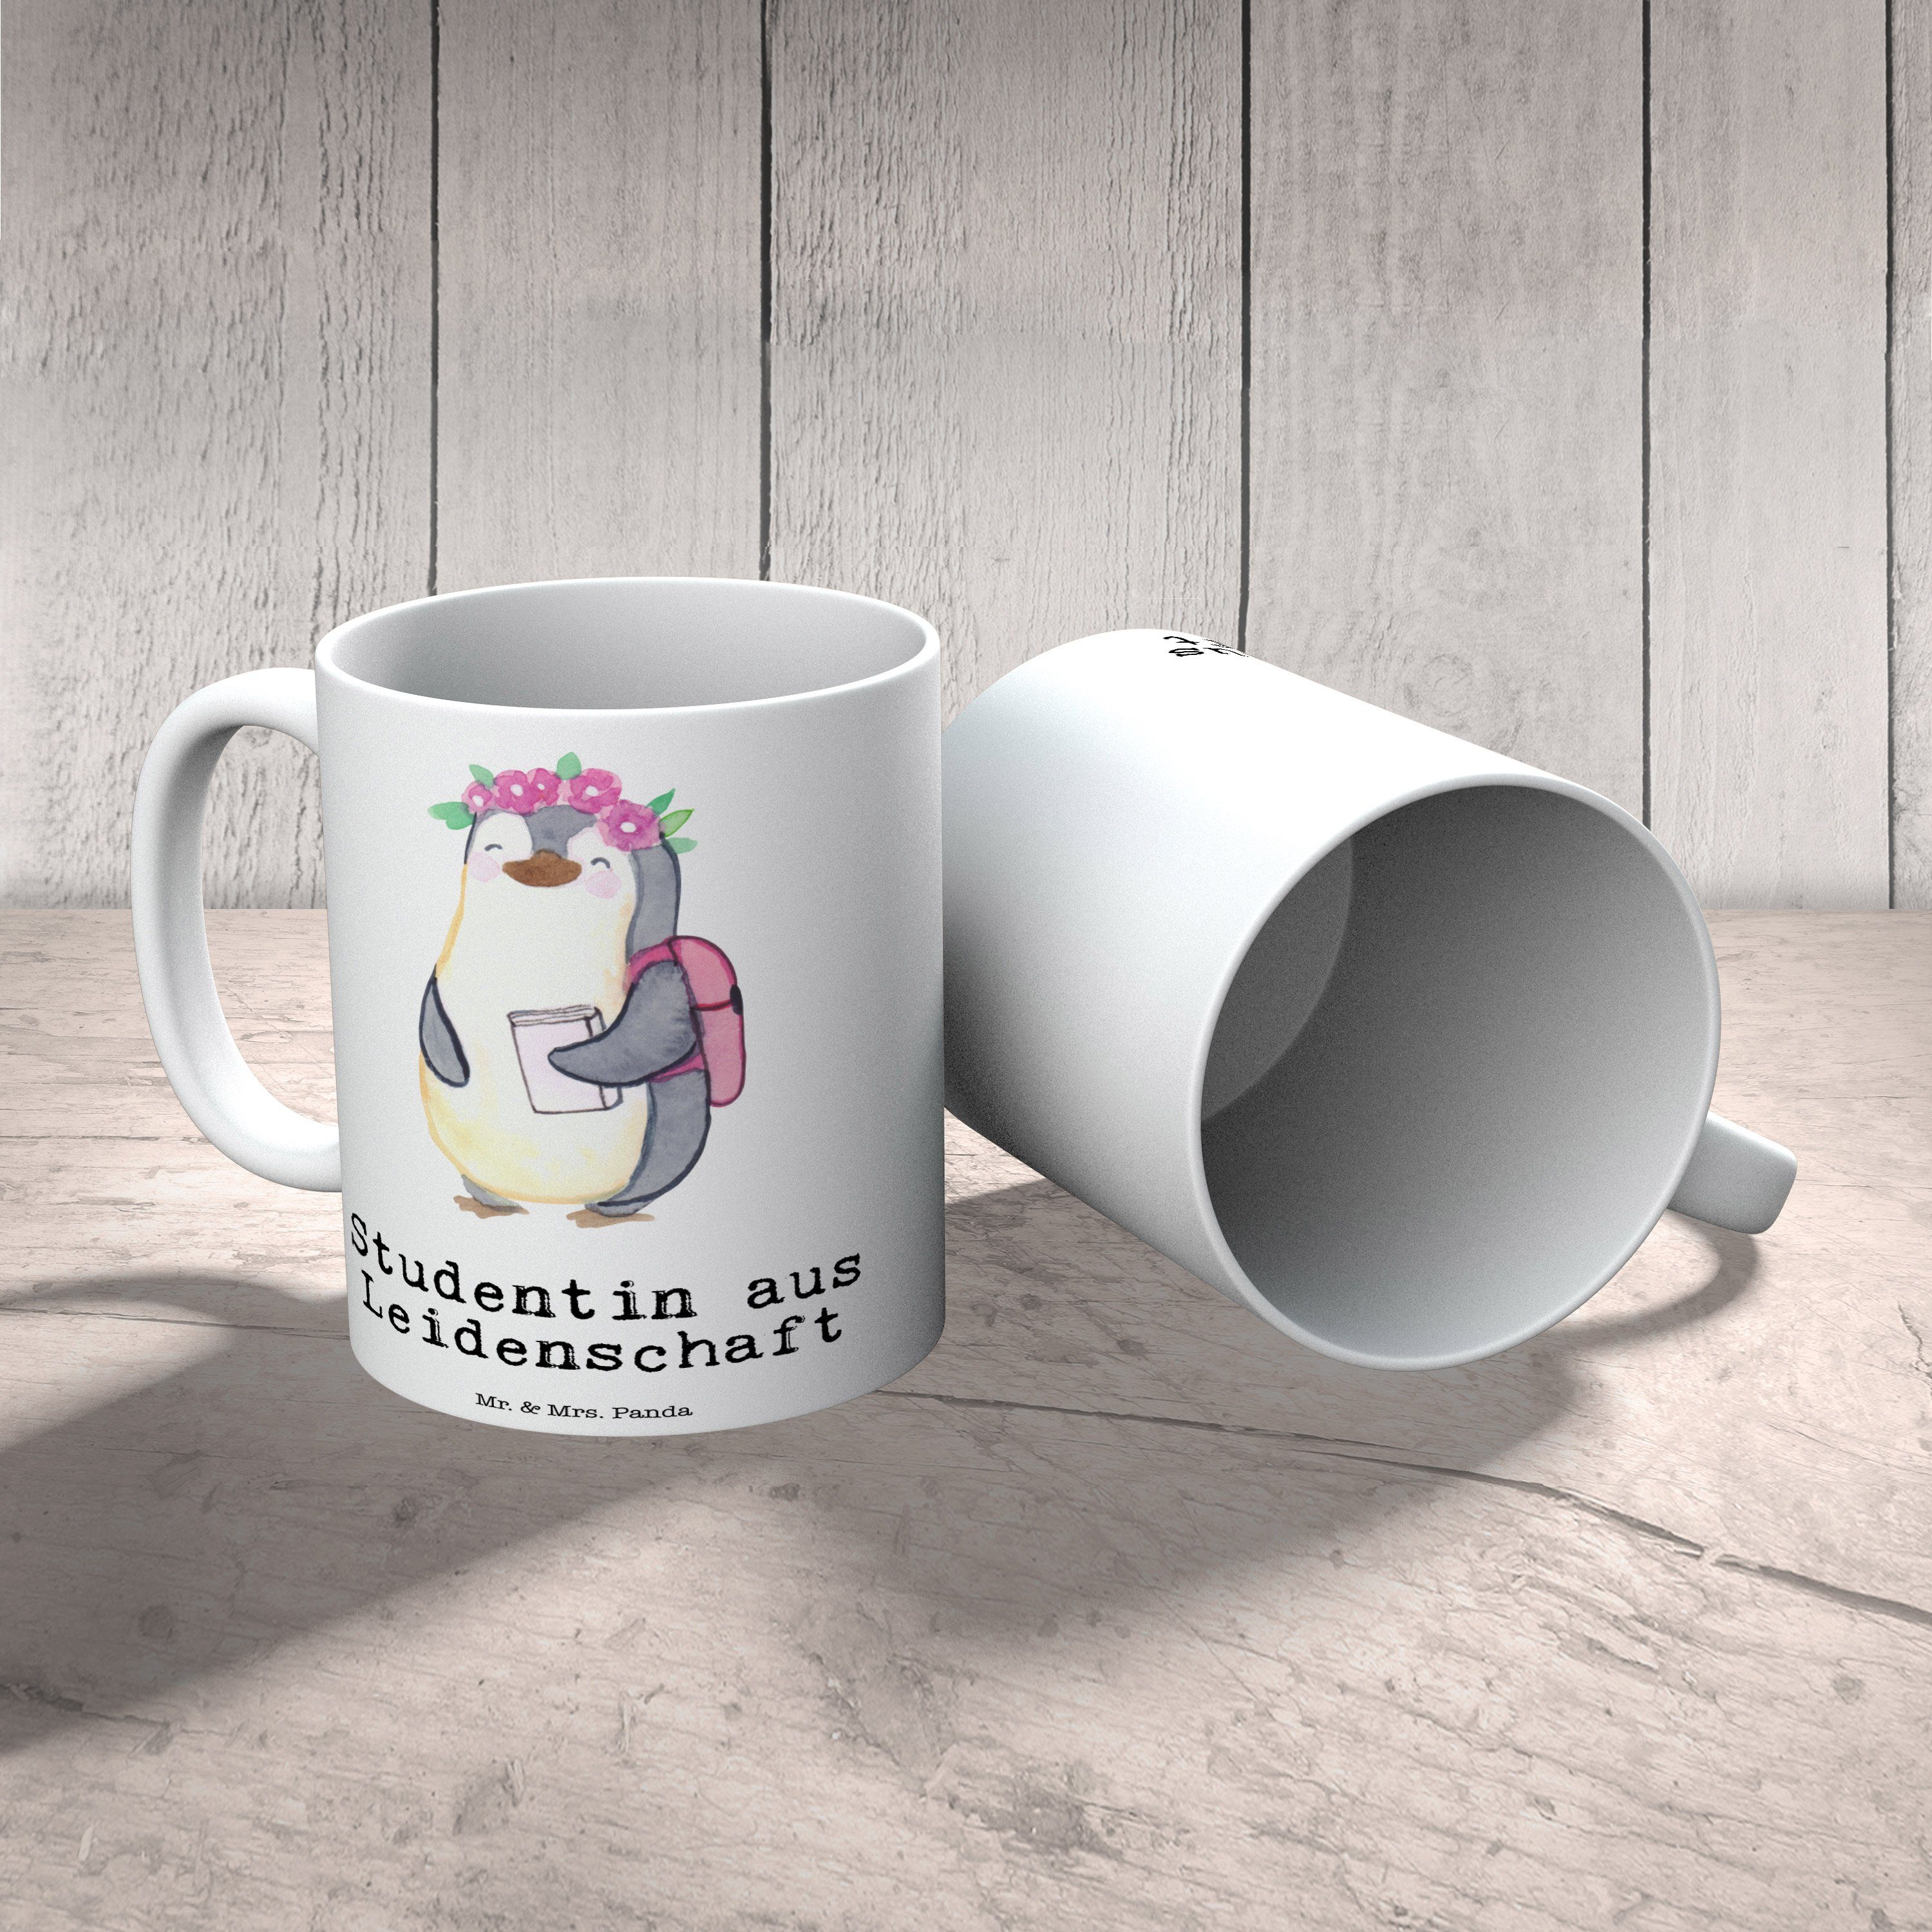 Mr. & Keramik Kaffeebecher, Mrs. Panda Tasse Studentin Weiß Teetasse, - Geschenk, aus - Leidenschaft